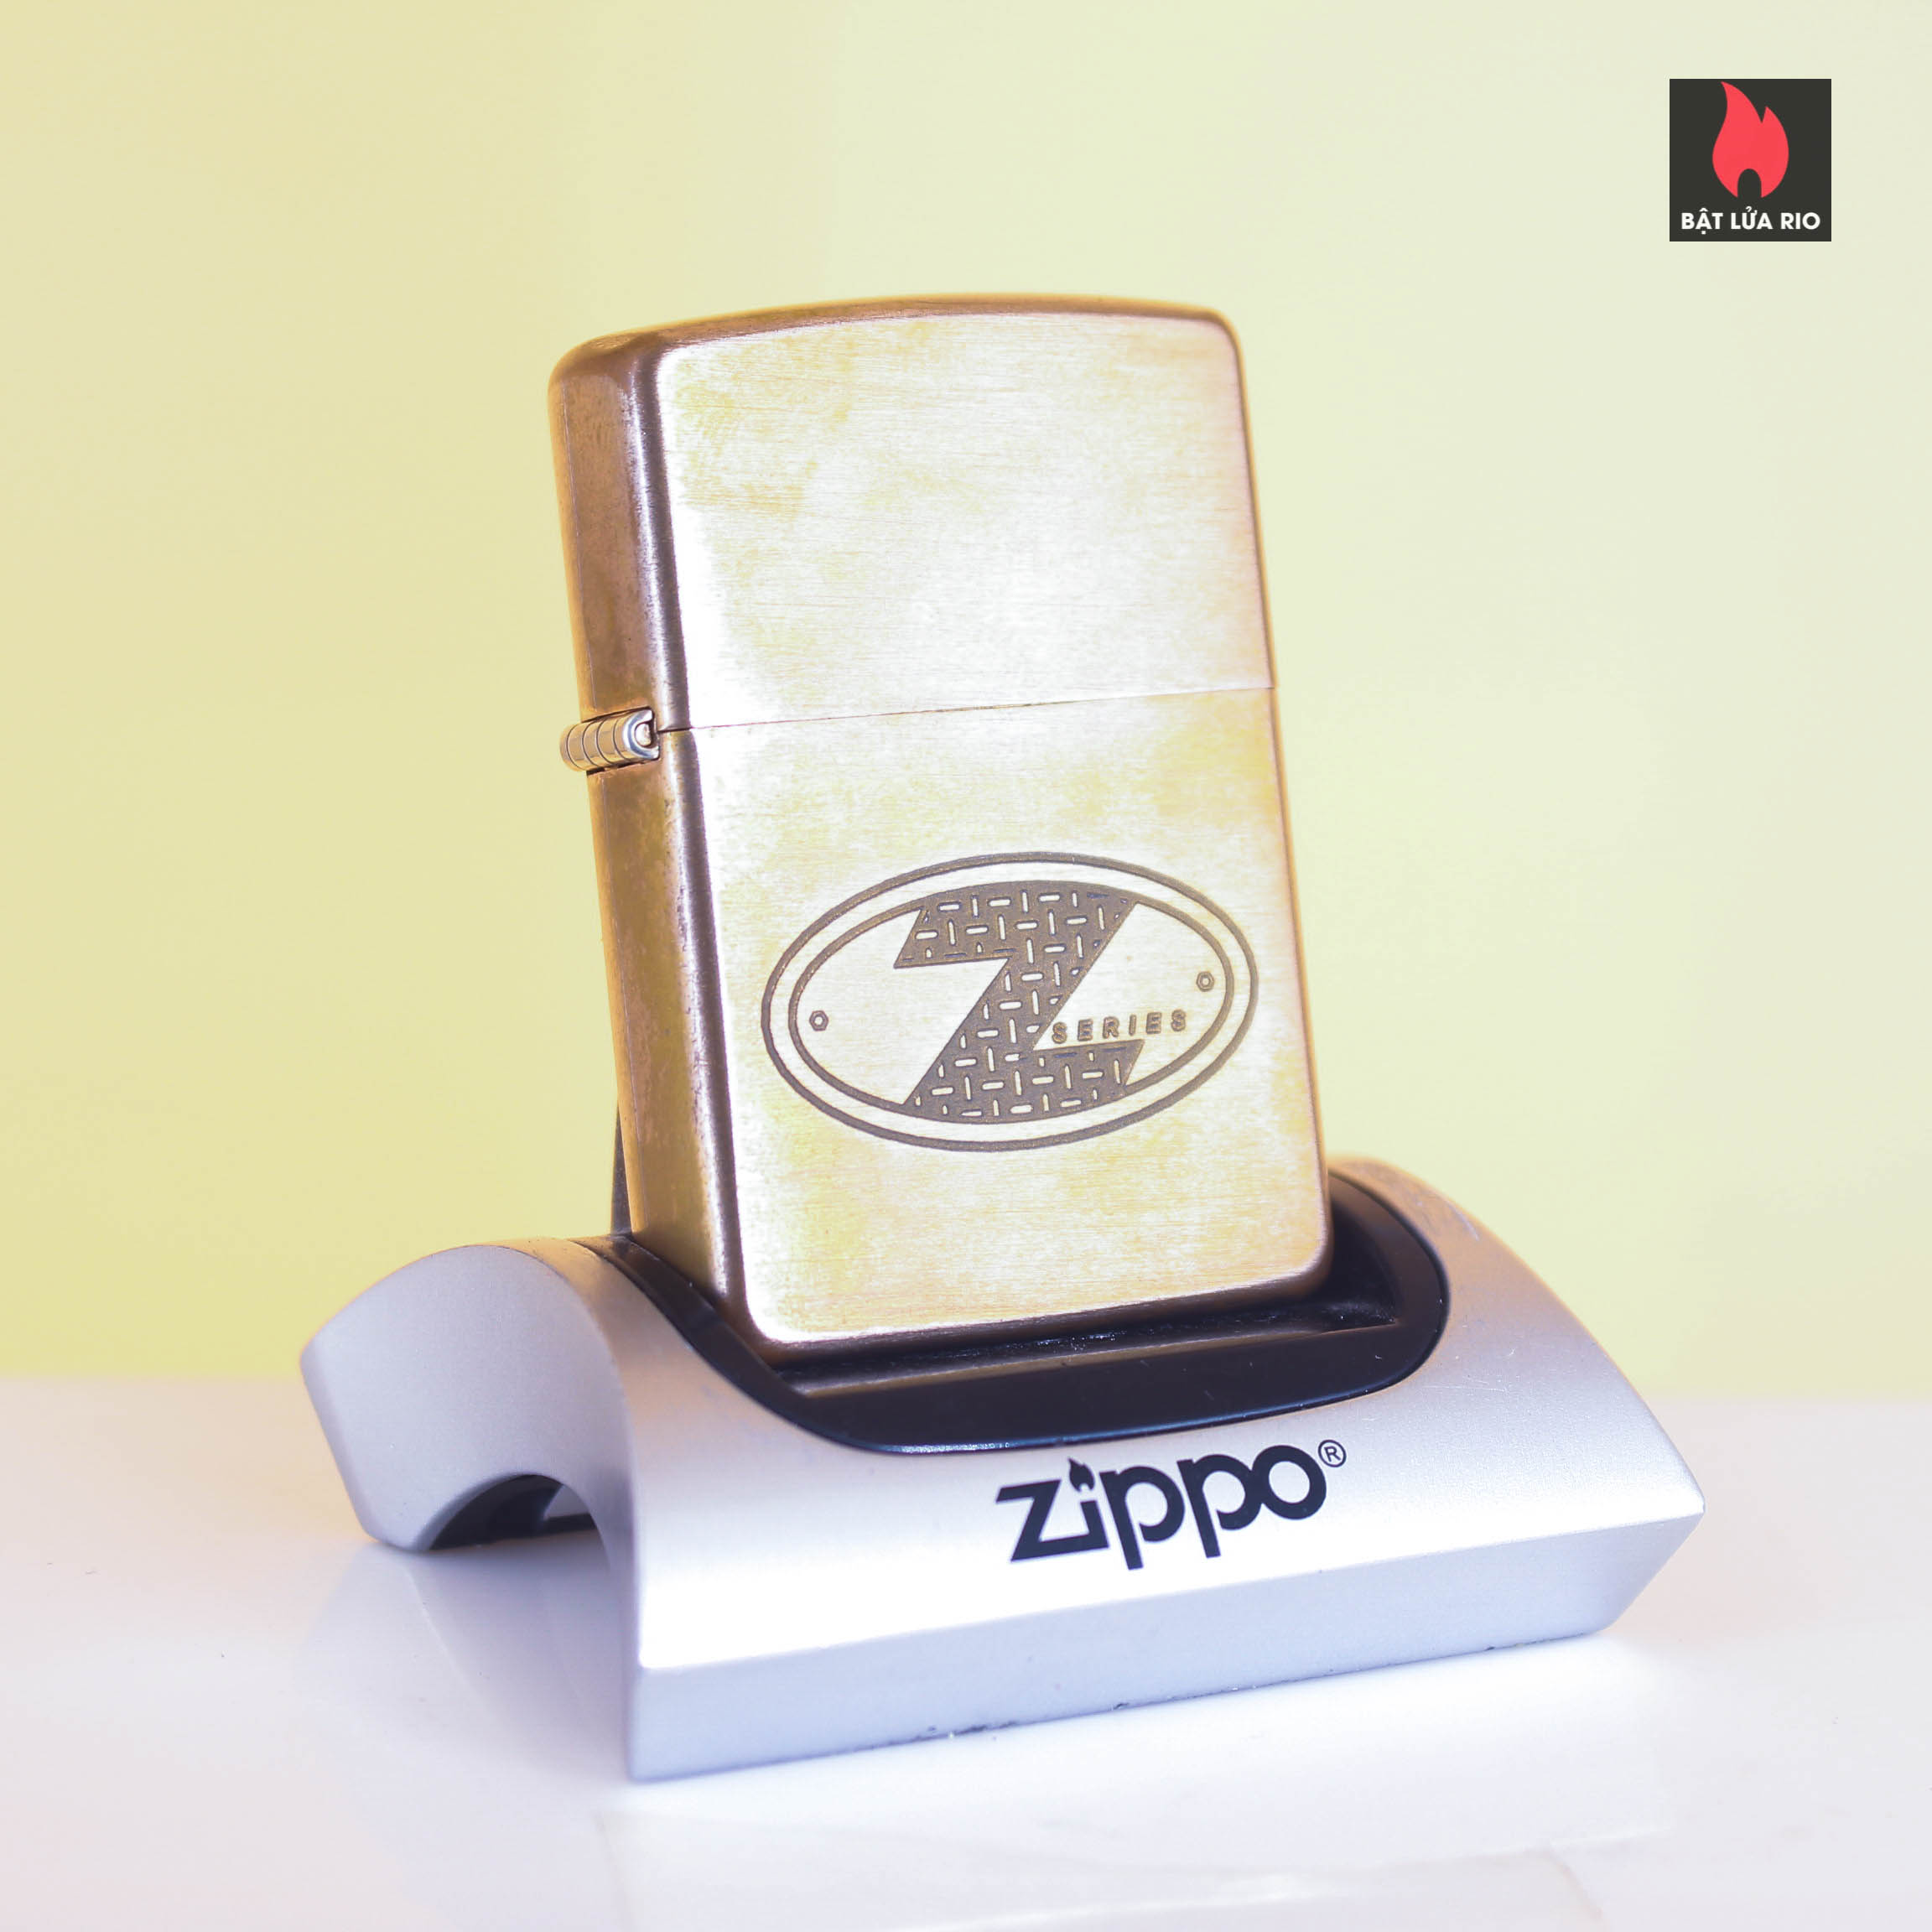 Zippo 2002 – Zippo Z-Series Copper Project – USA – Limited 03588/10188 A